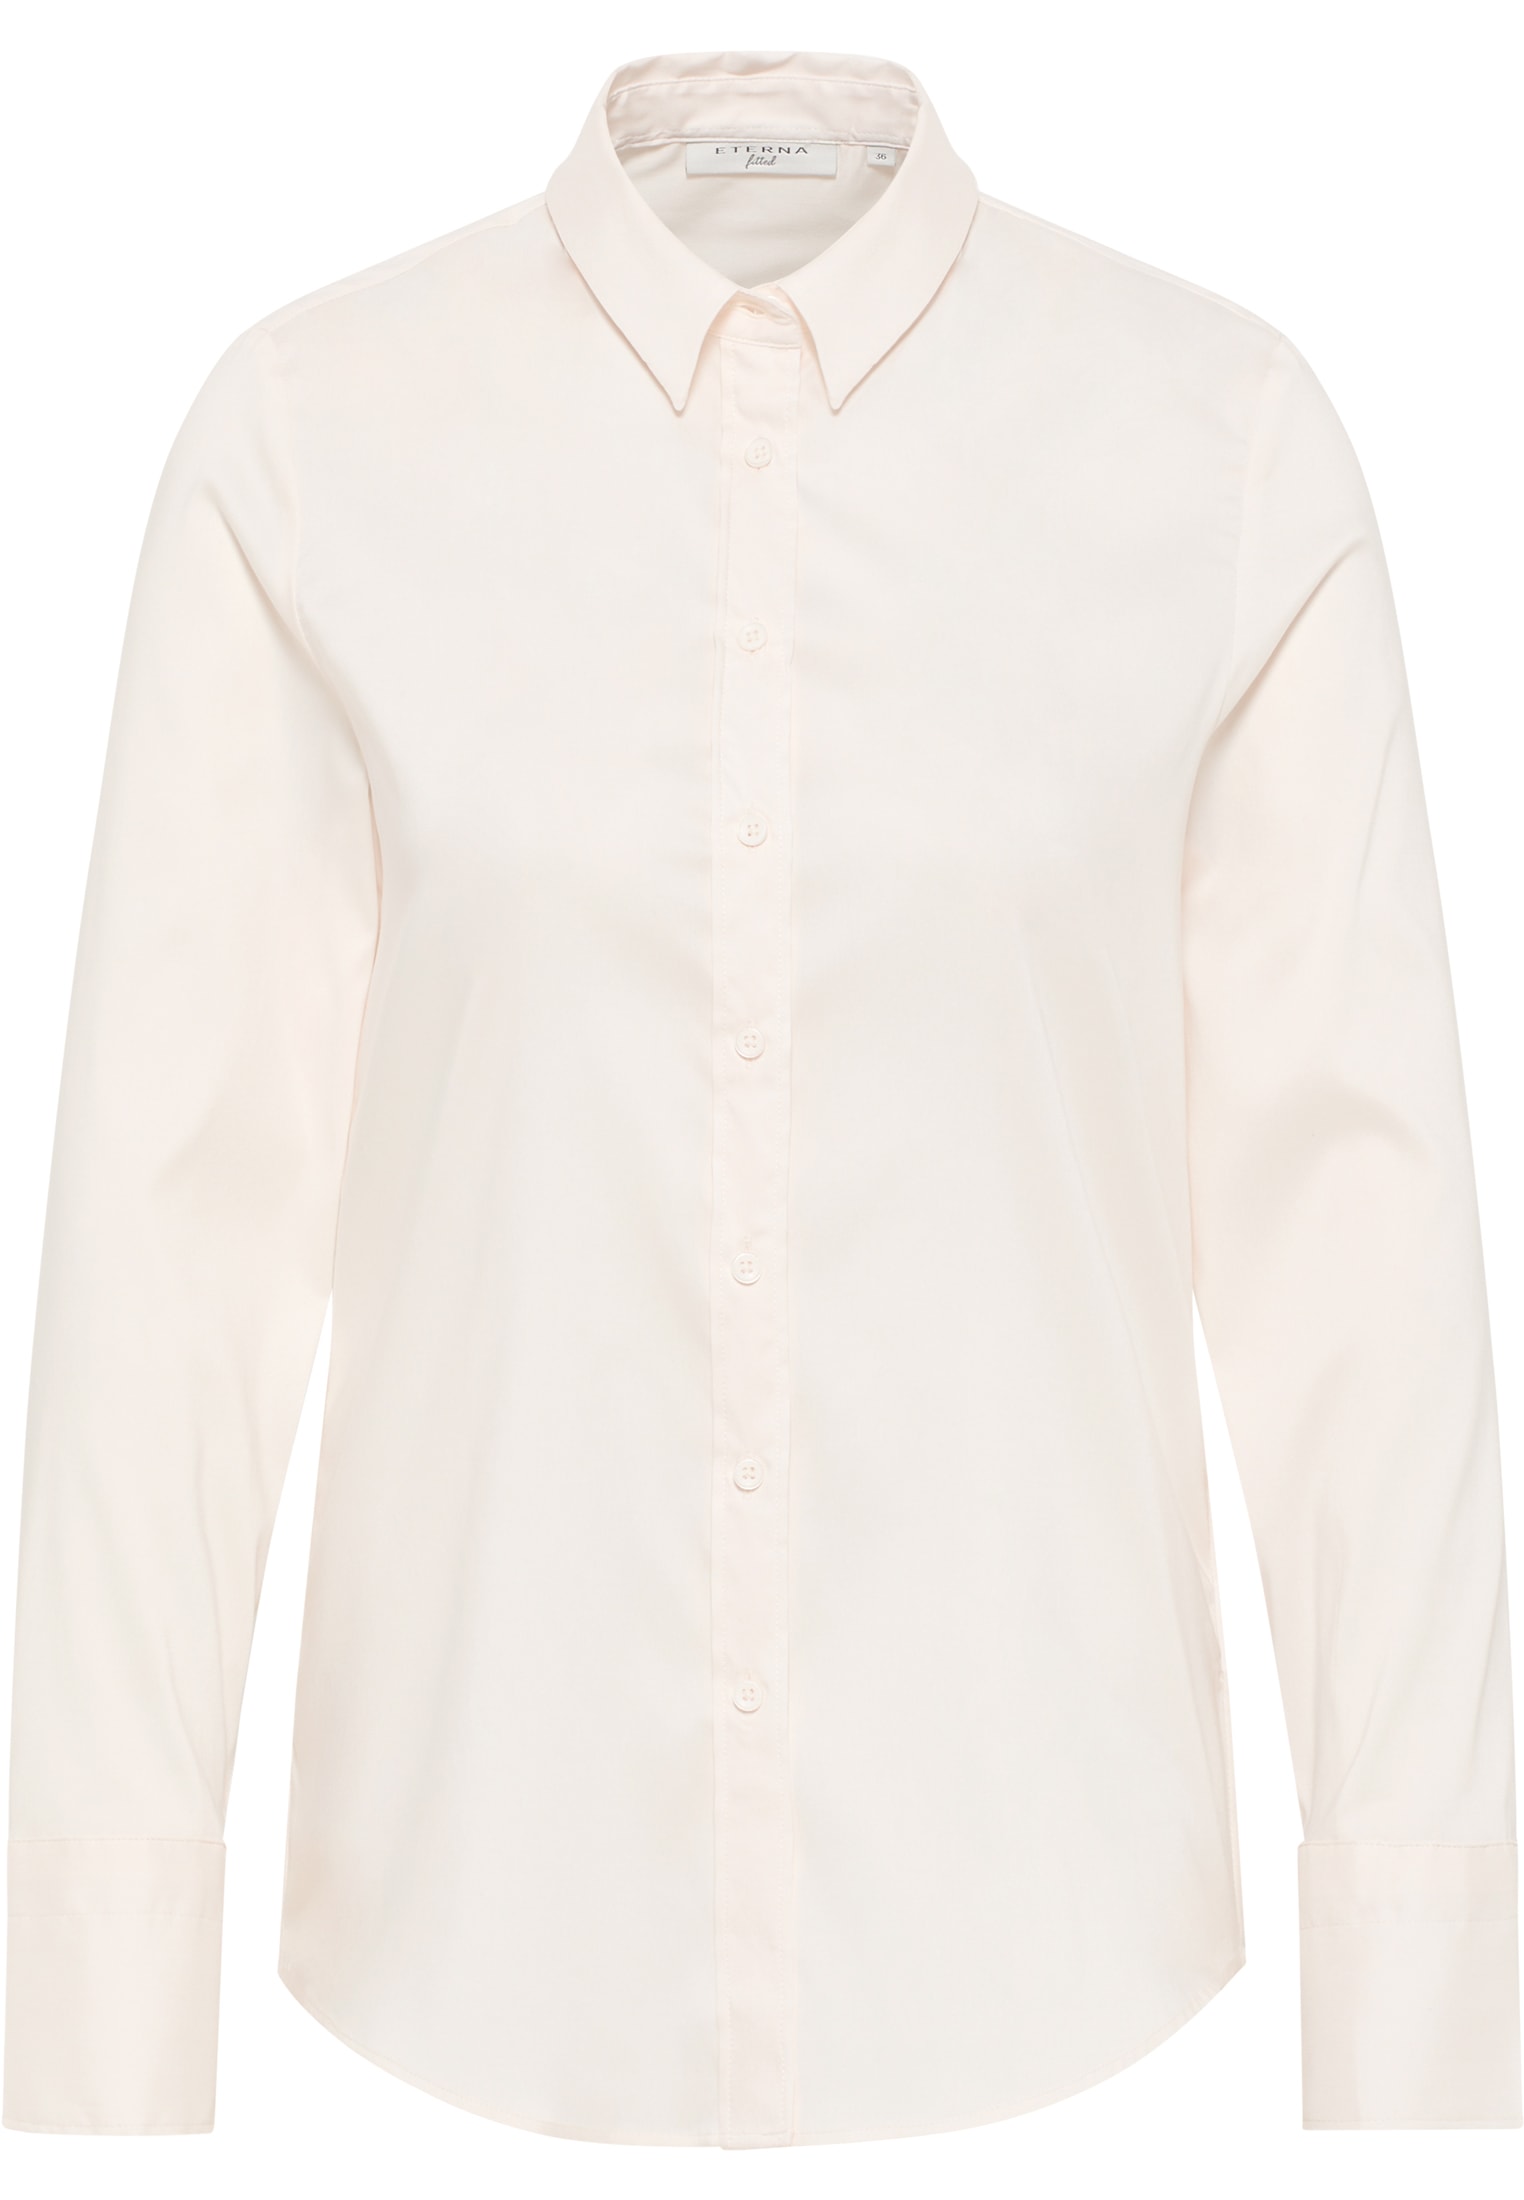 Performance Shirt Bluse in off-white unifarben | off-white | Langarm | 38 |  2BL00441-00-02-38-1/1 | Blusenshirts